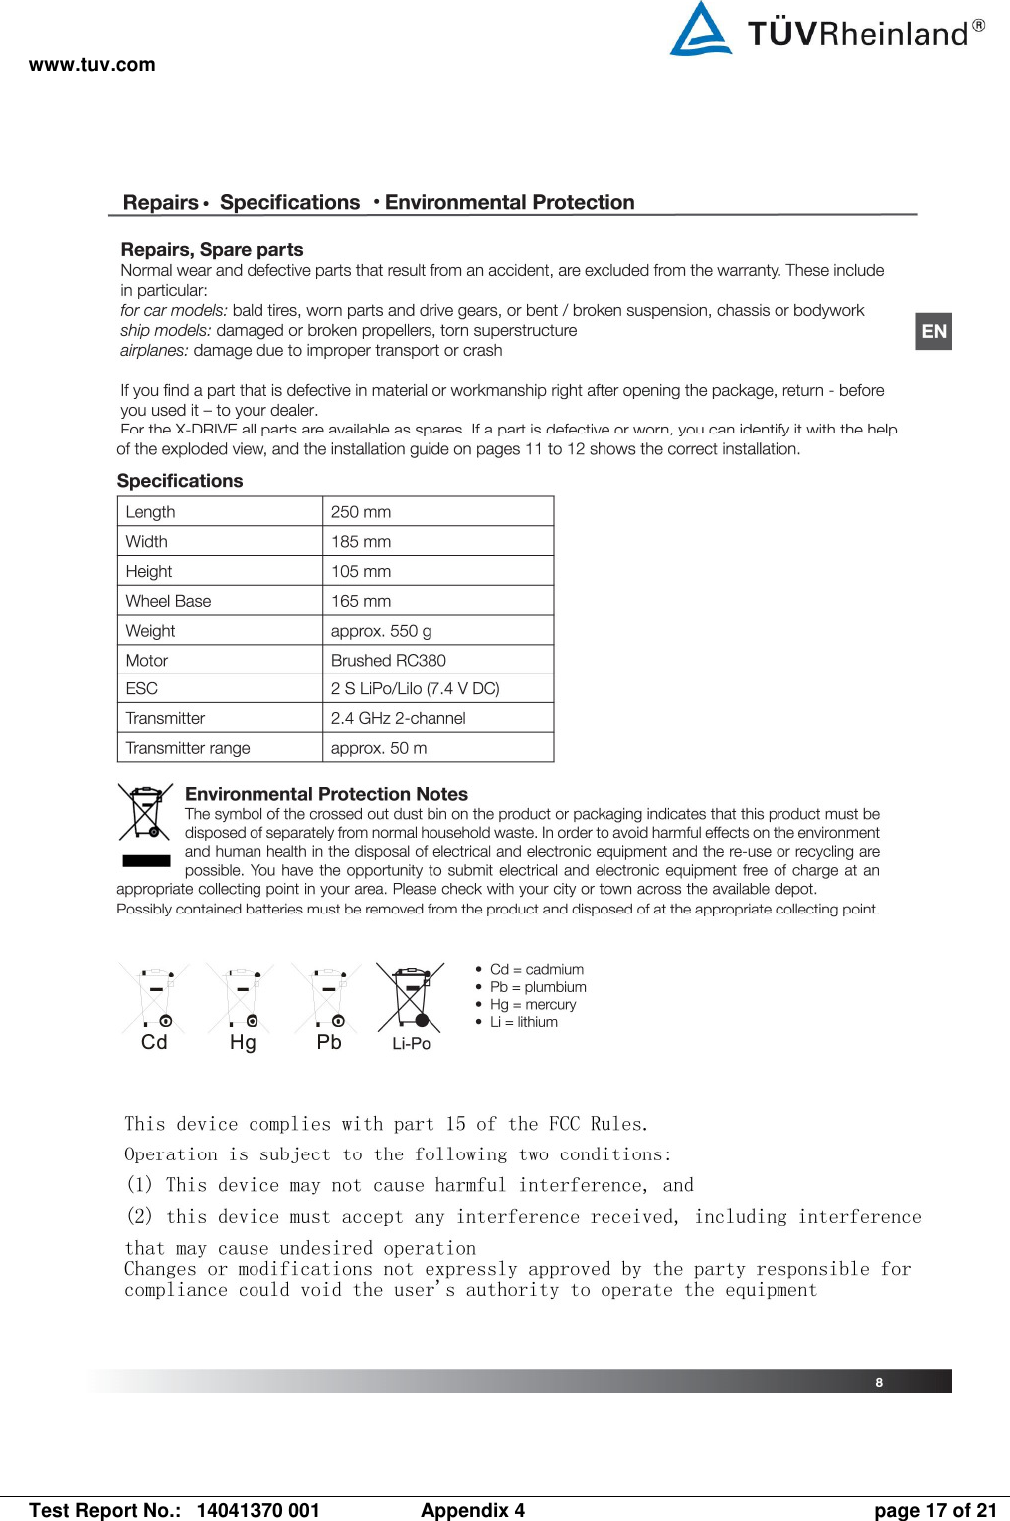 www.tuv.com   Test Report No.:  14041370 001  Appendix 4  page 17 of 21  